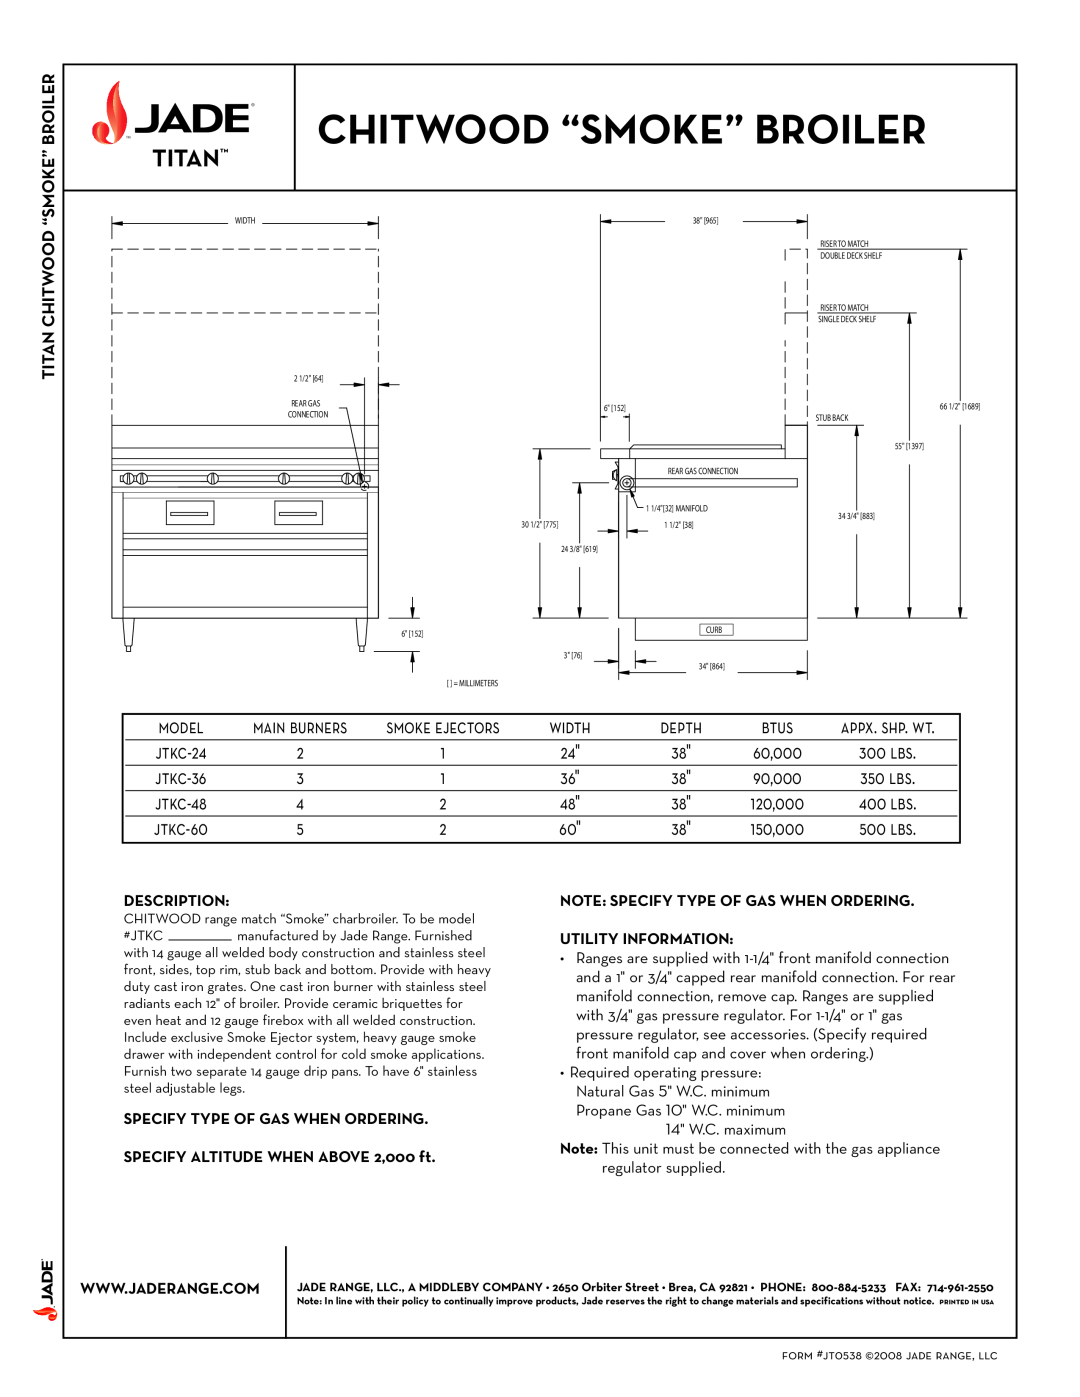 Jade Range JTKC-60 model, main burners, smoke ejectors, width, depth, btus, “Smoke” Broiler, Titan Chitwood, Description 